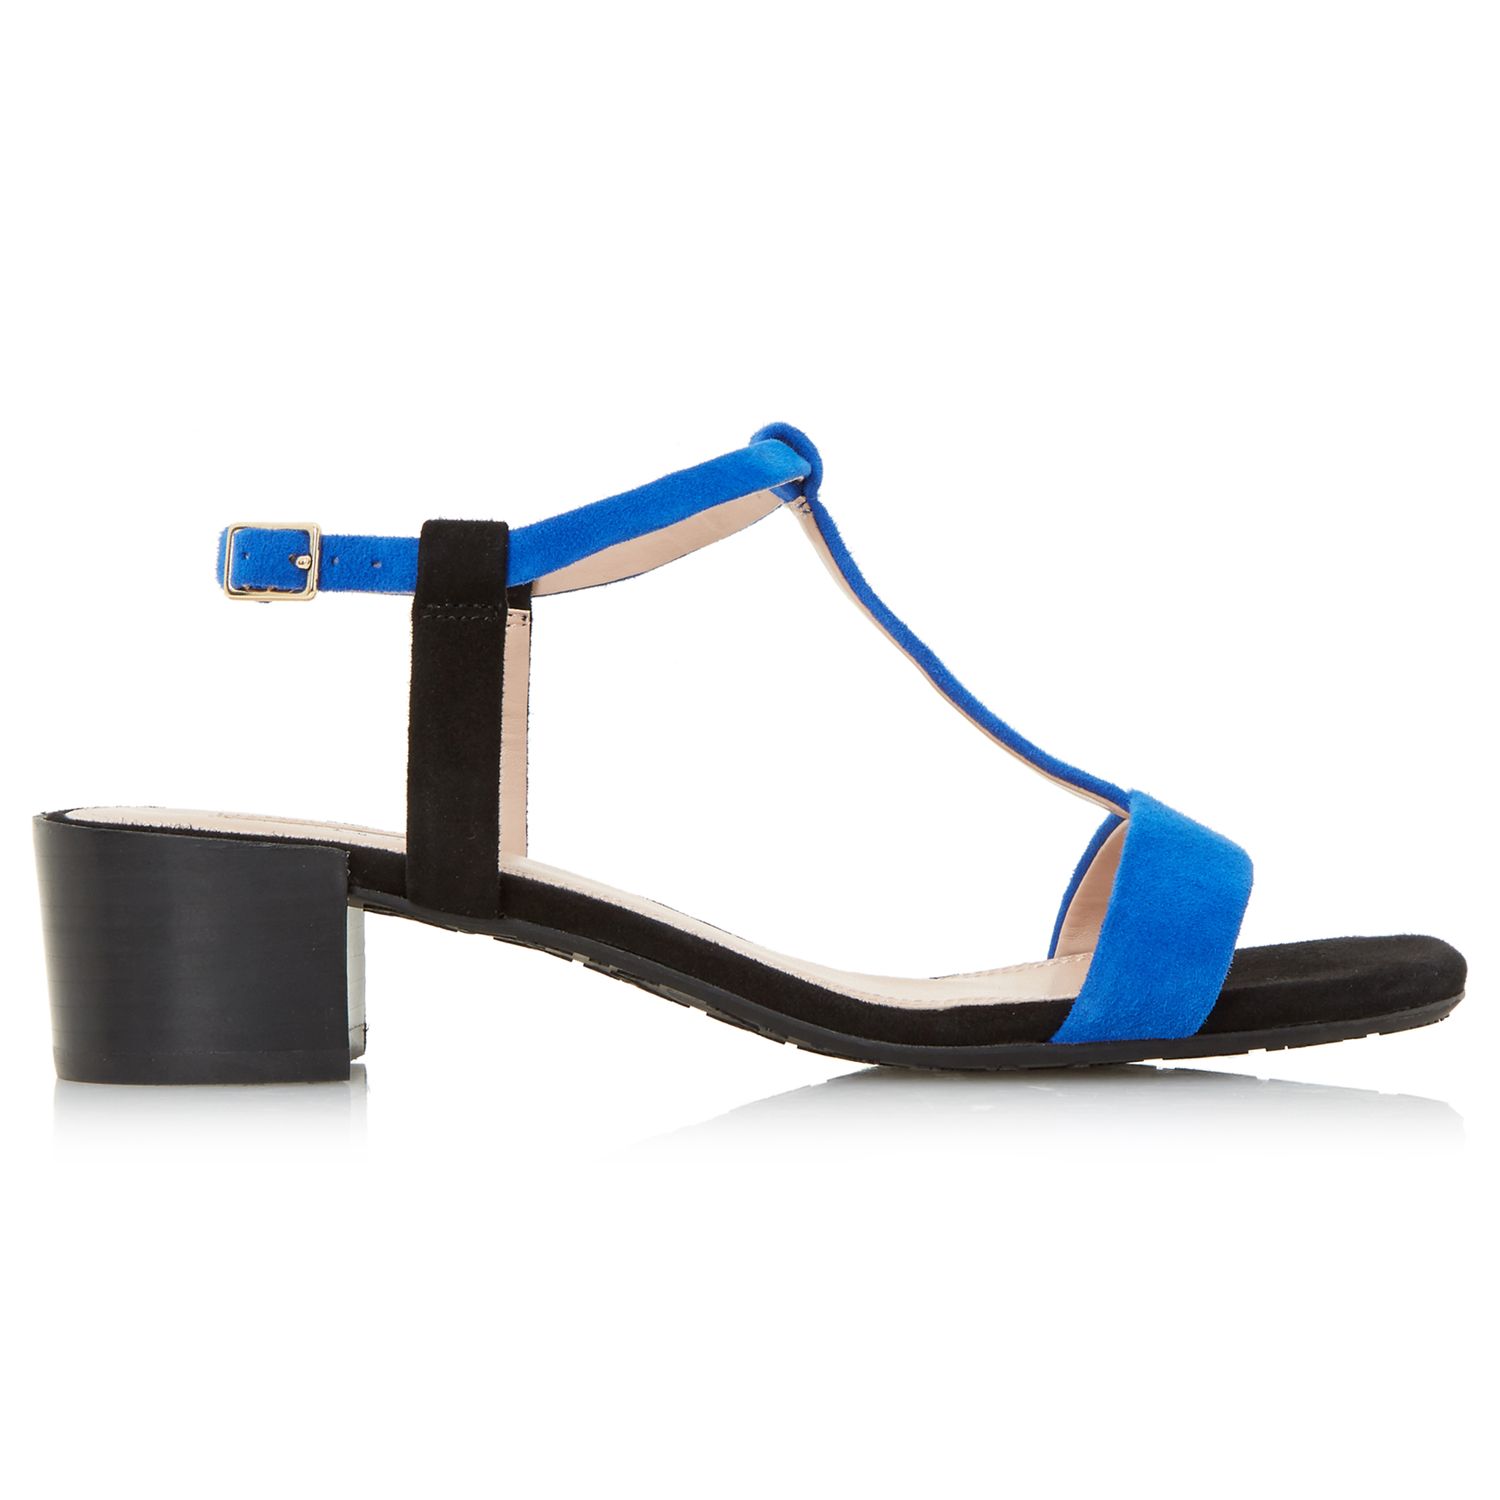 Dune Issie T-Bar Block Heeled Sandals, Black/Blue Suede, 6